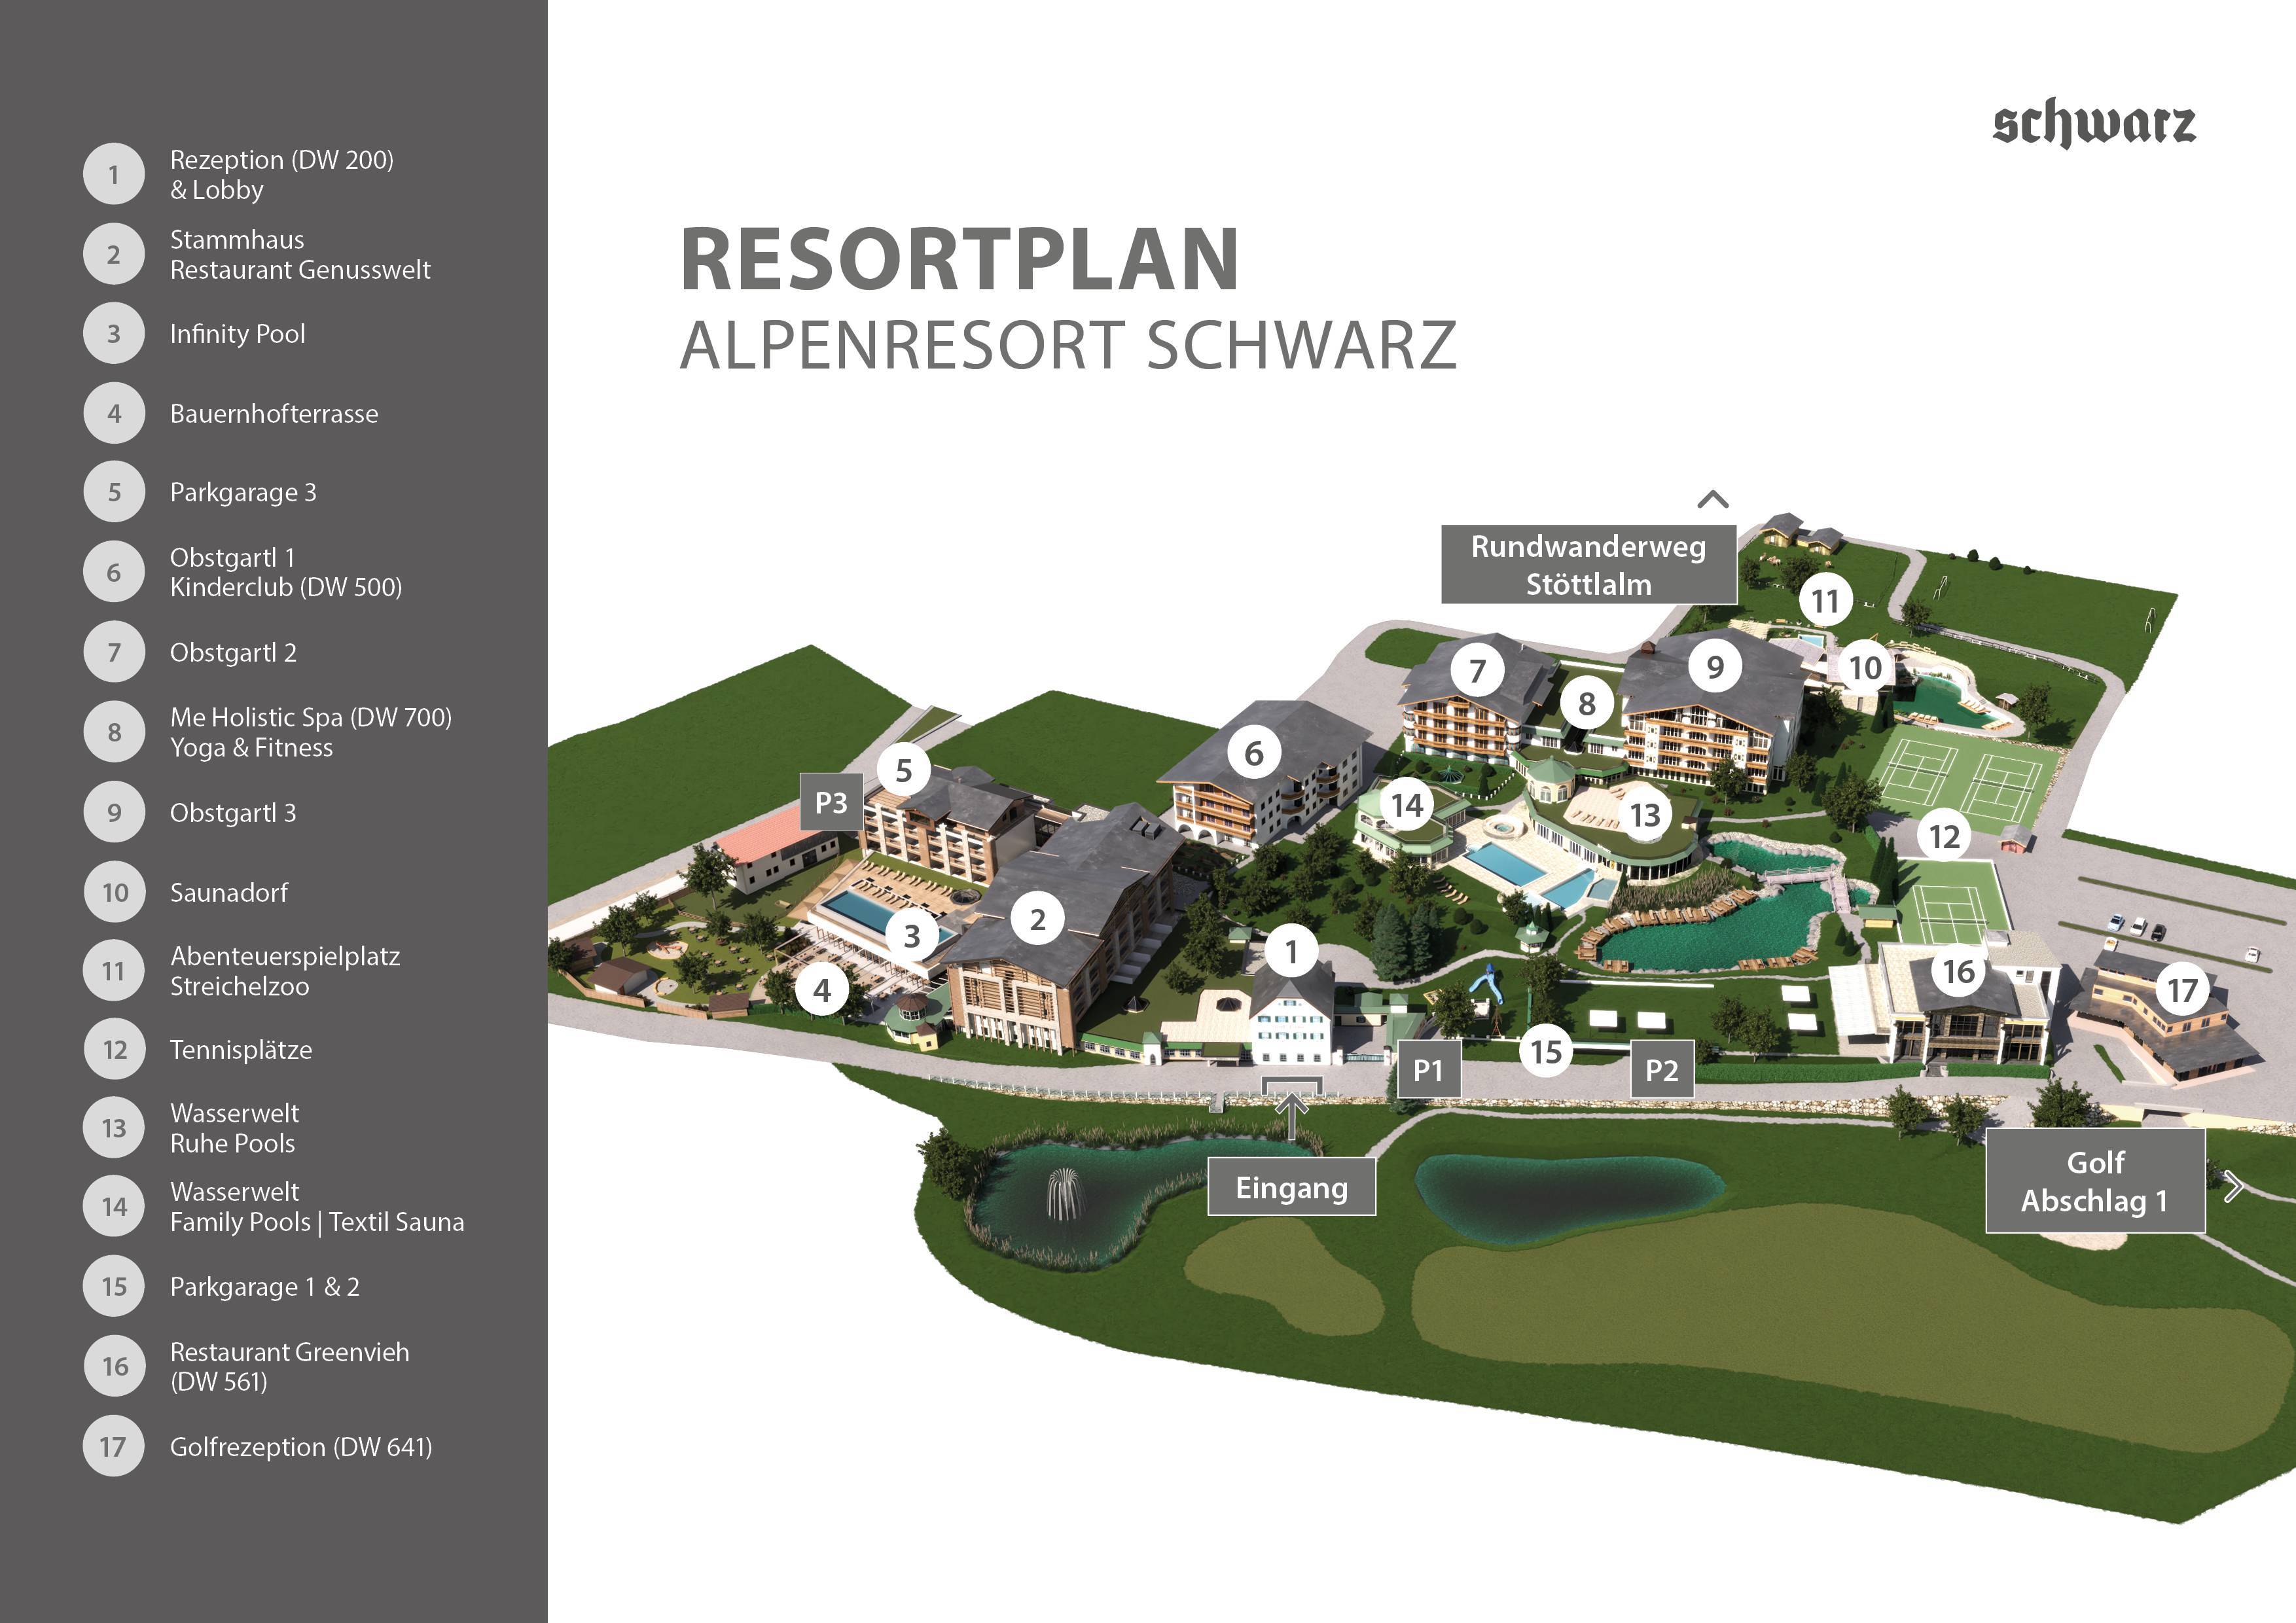 Alpenresort Schwarz Resortplan